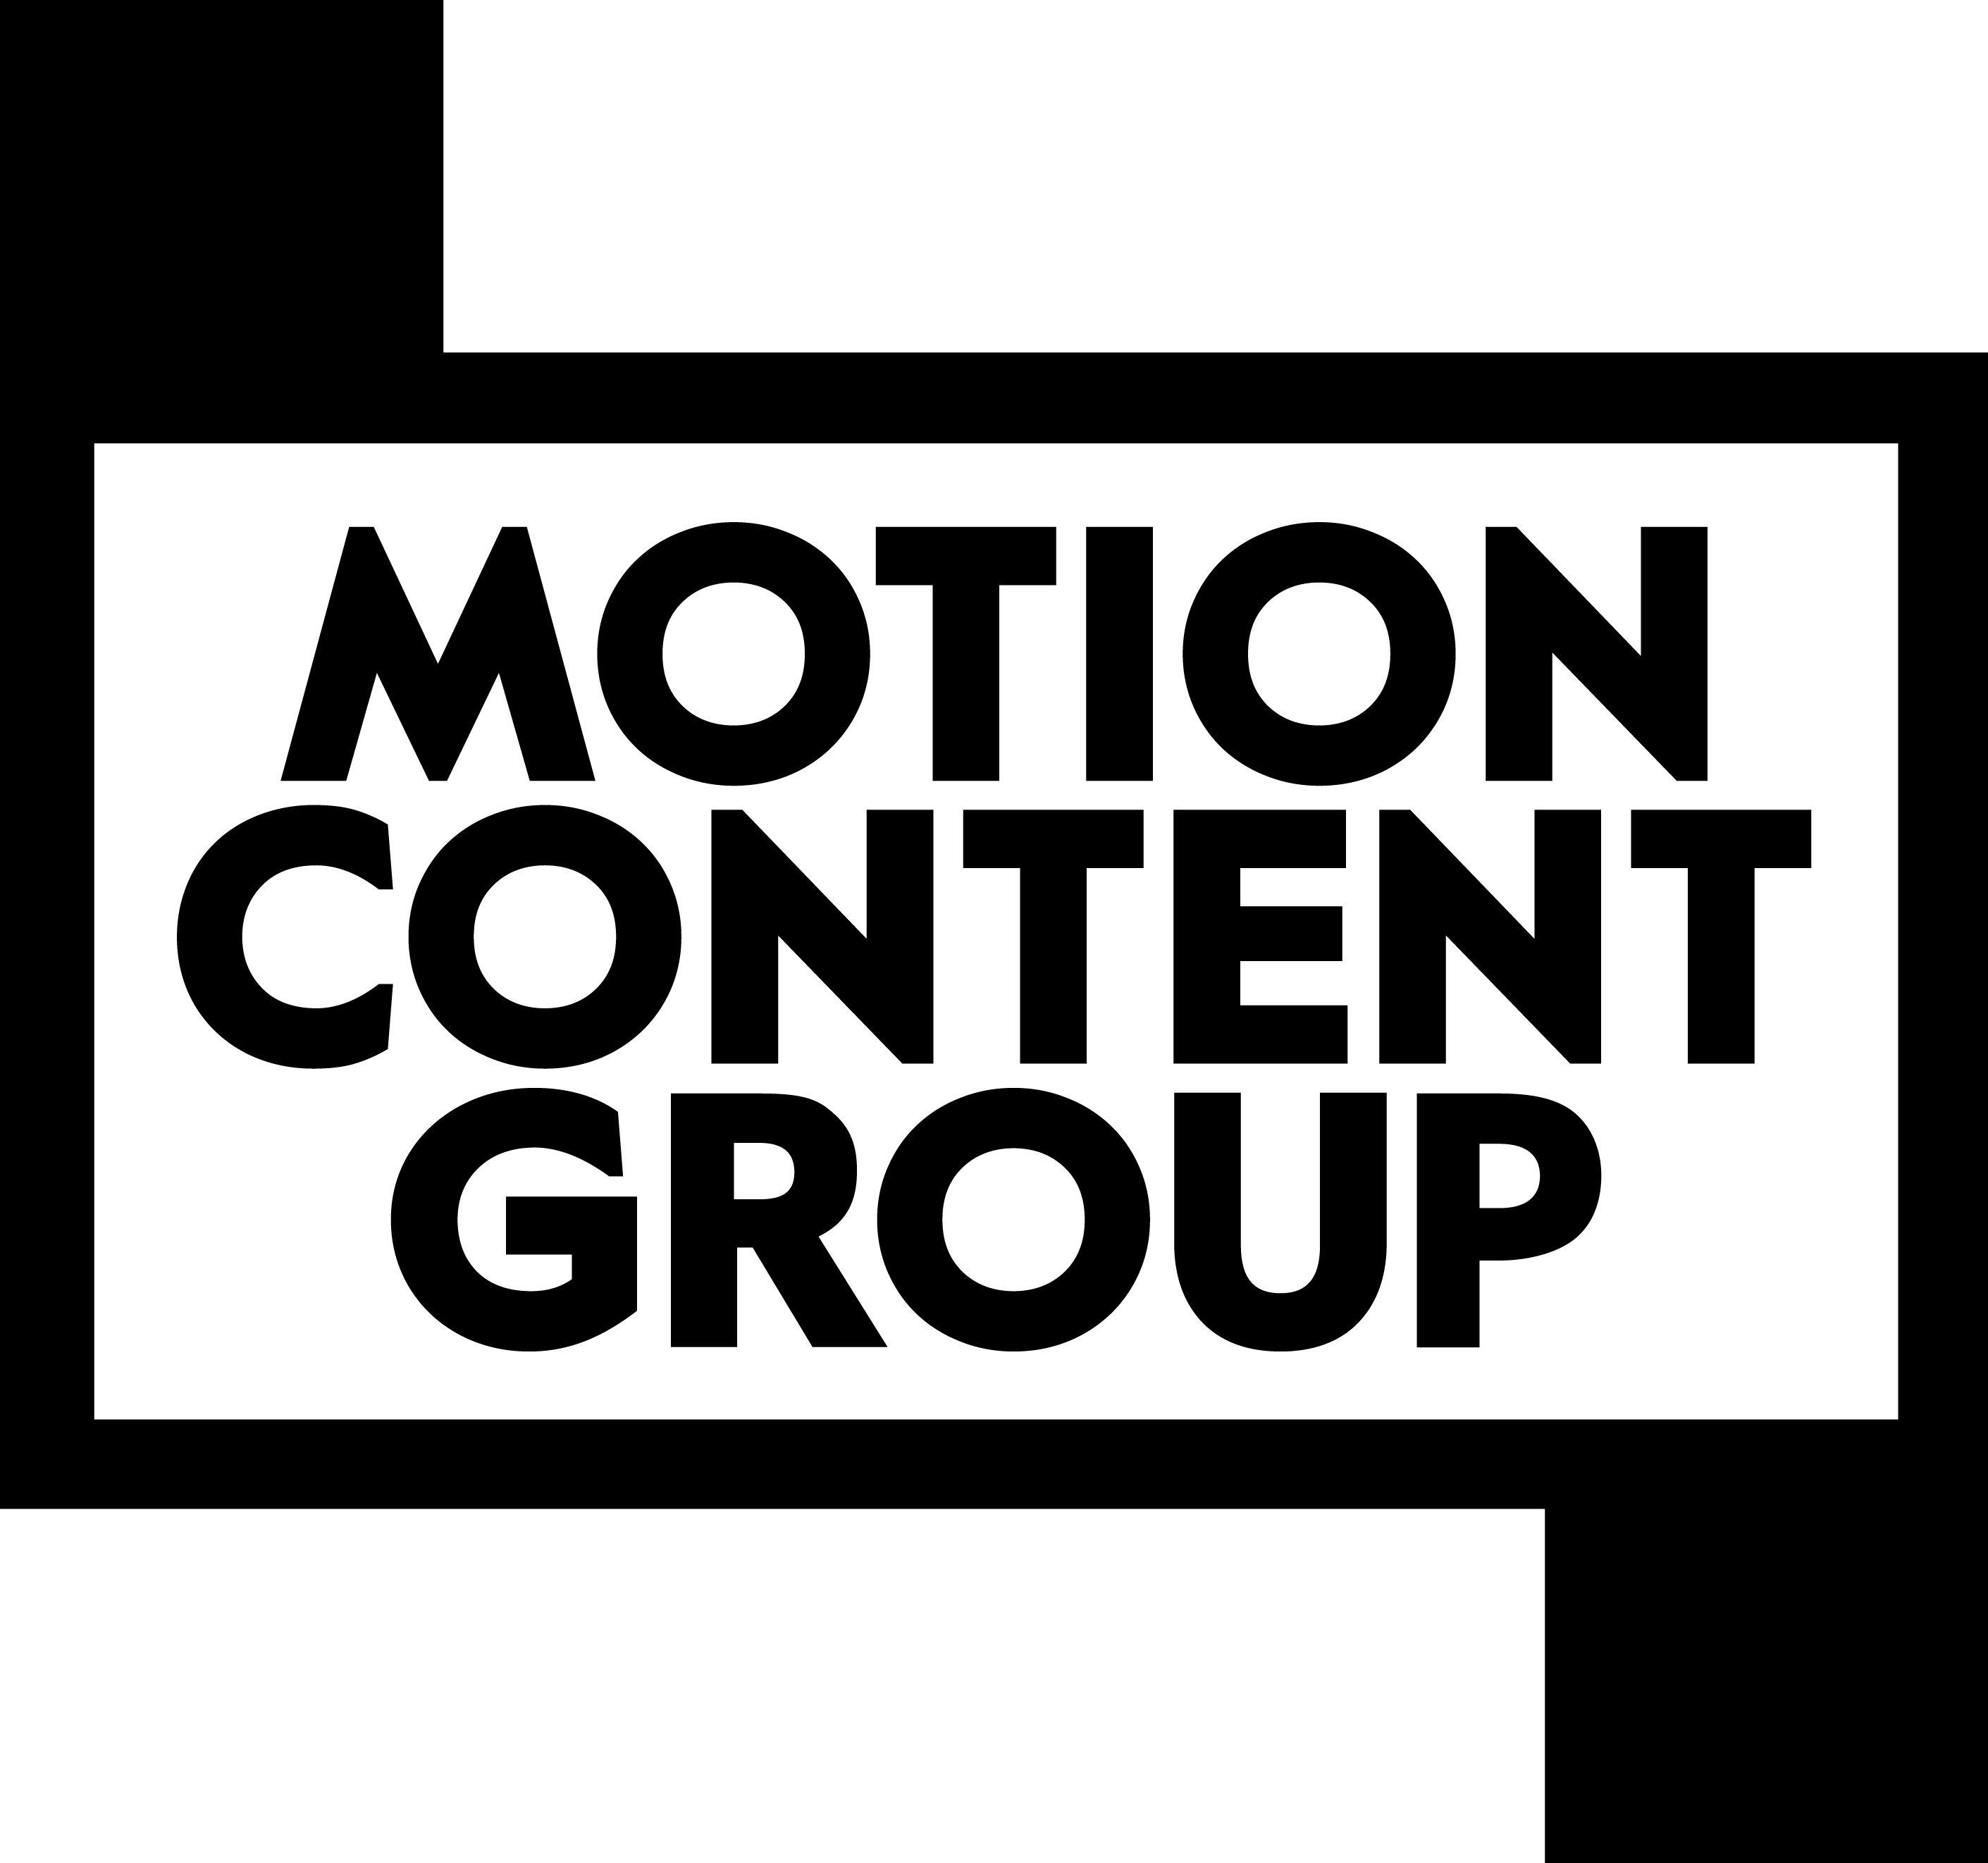 GroupM Logo - Motion Content Group.jpeg